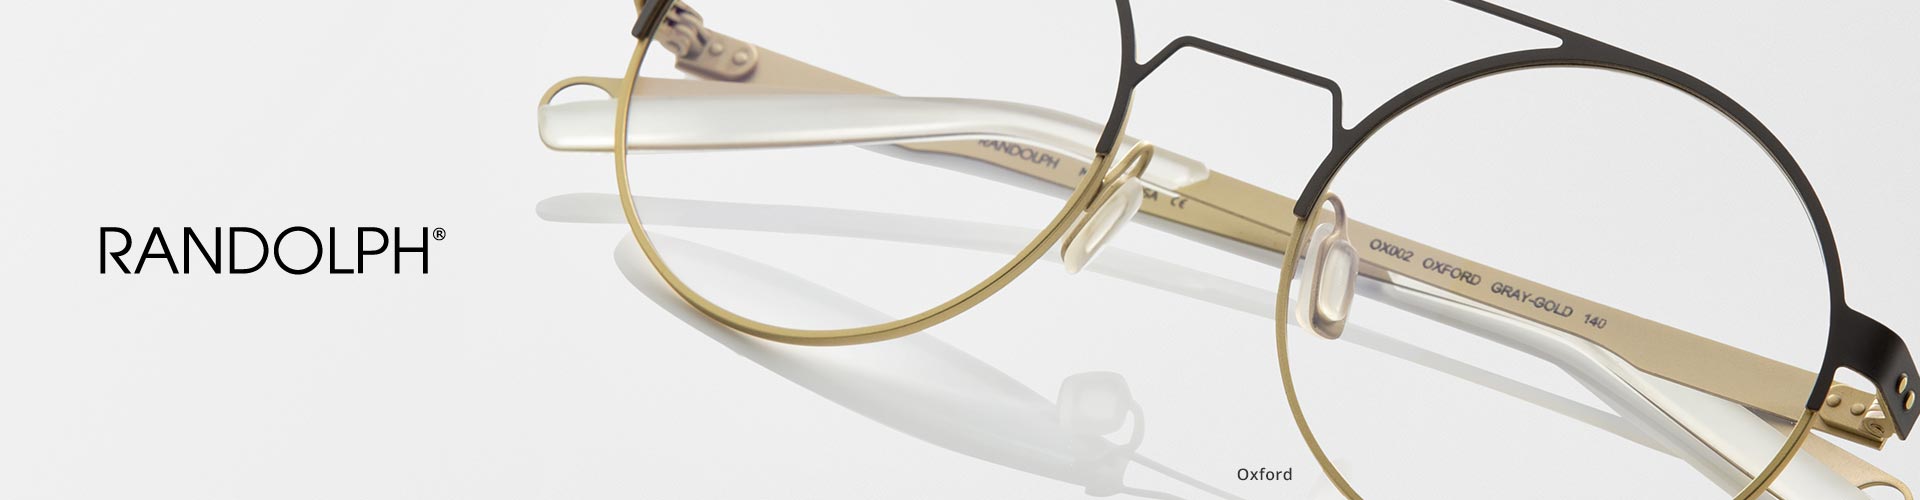 Shop Randolph Engineering Eyeglasses - model Oxford featured